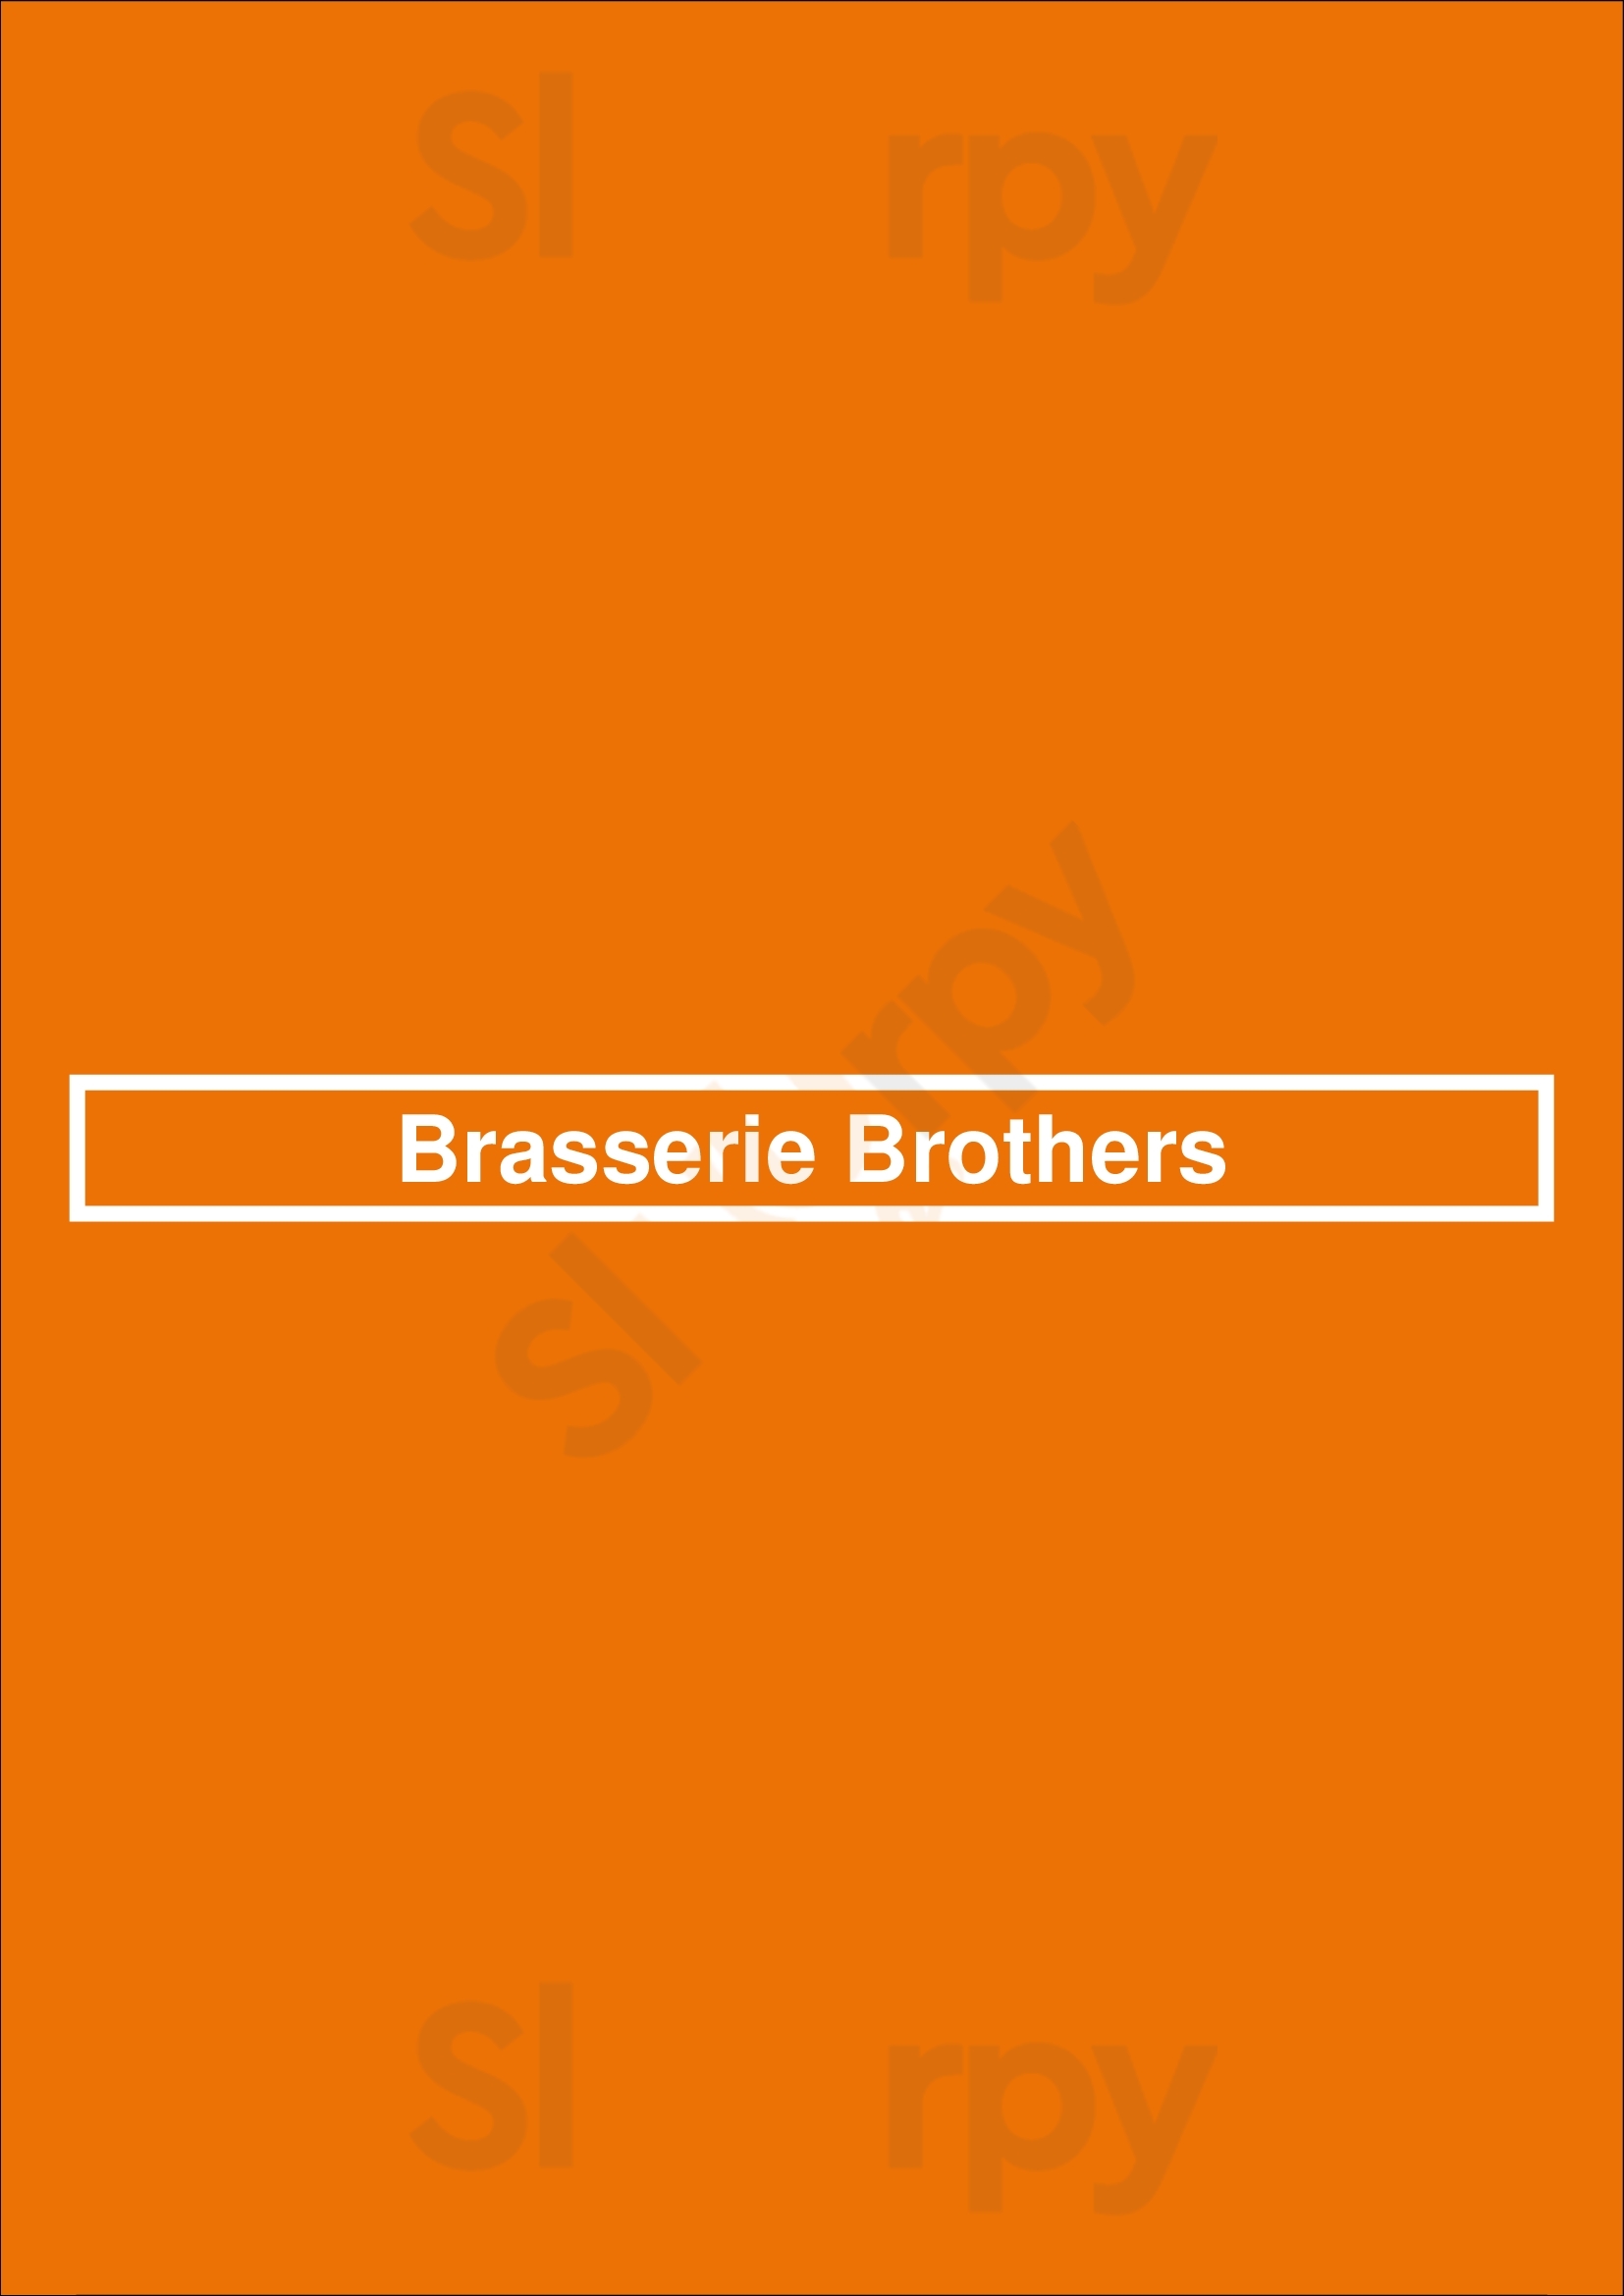 Brasserie Brothers Wateringen Menu - 1